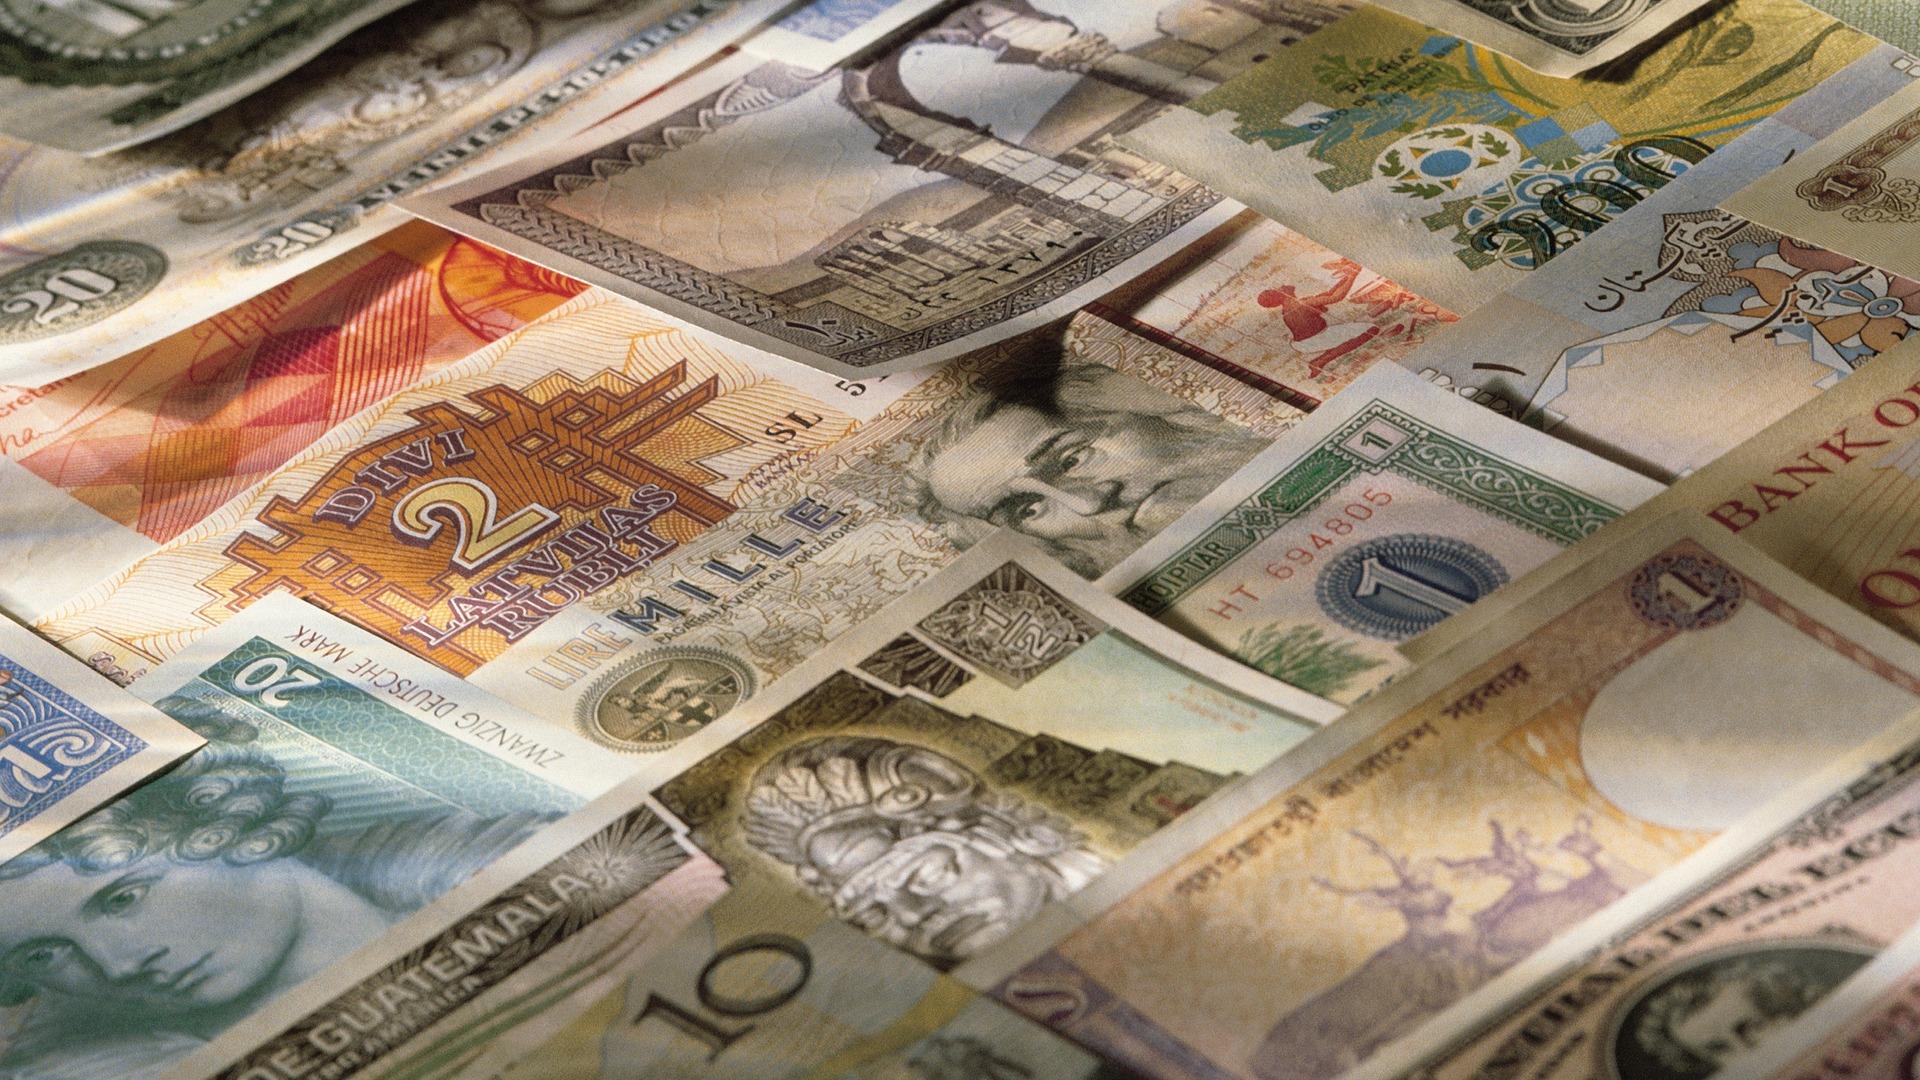 Download wallpaper 1920x1080 bills, money, bank notes, currency full